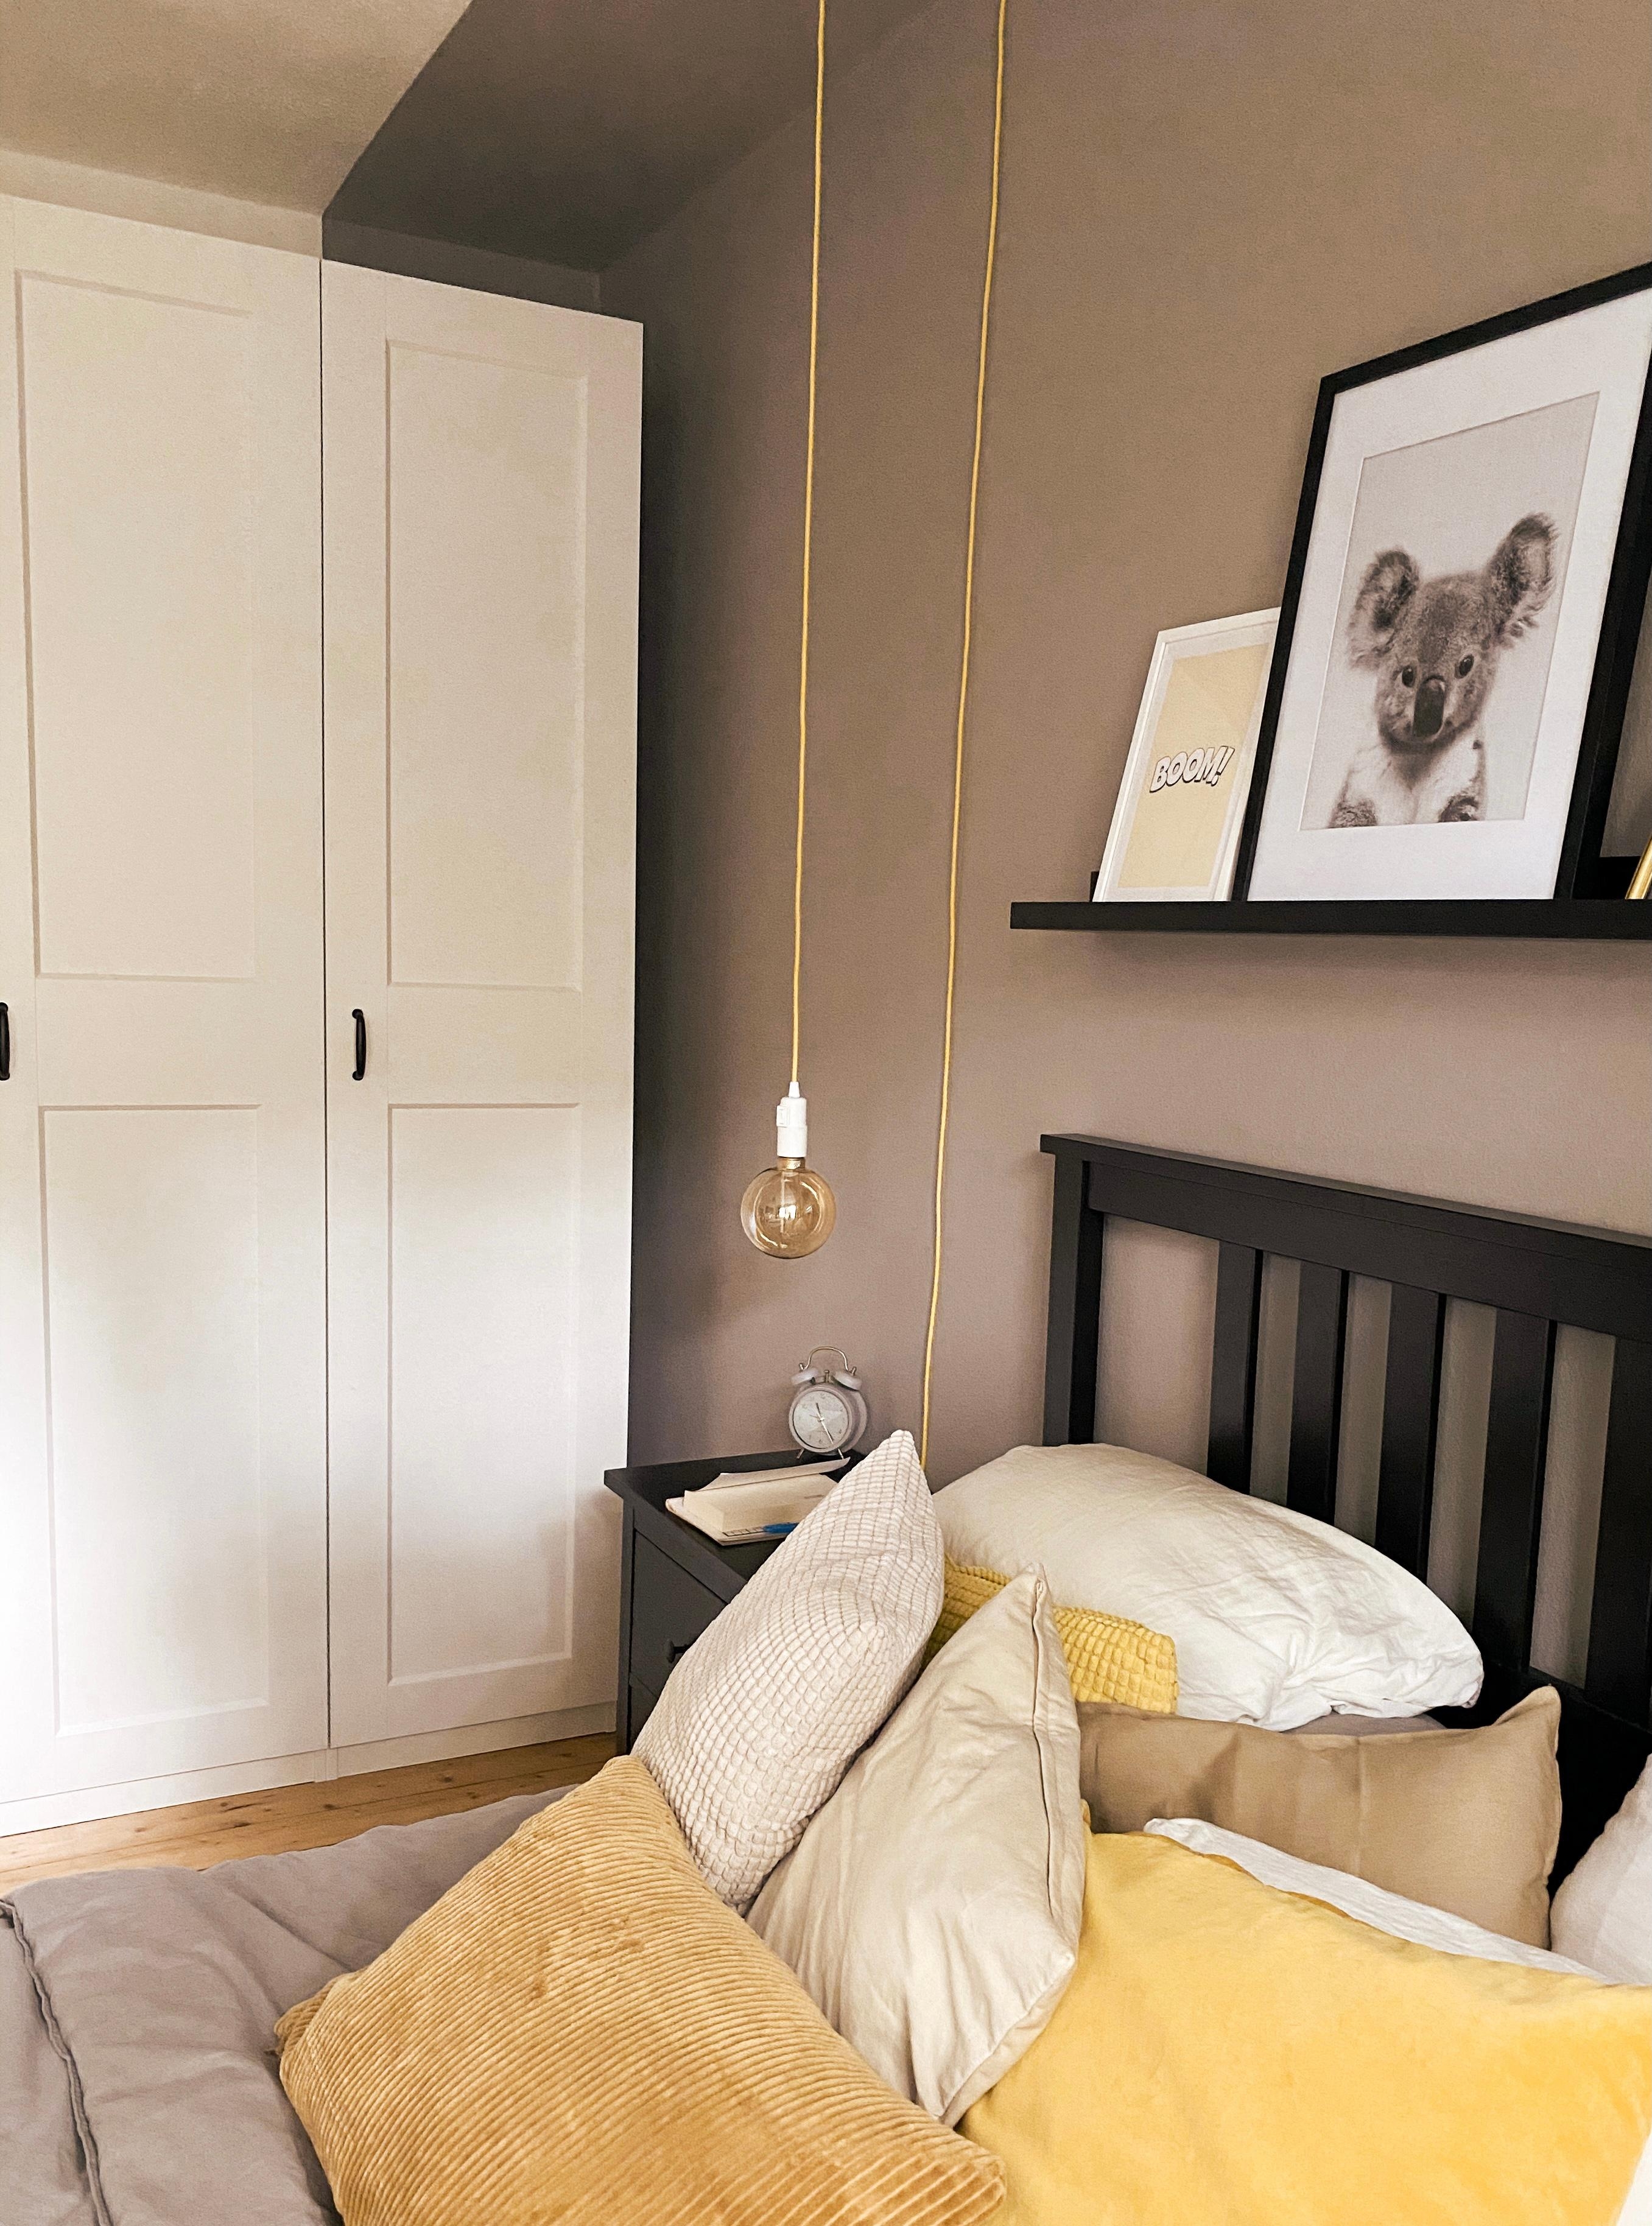 #schlafzimmer #bedroom #interiordesign #couch #bedroom 
#wandgestaltung #trendfarbe #yellow #lampe 